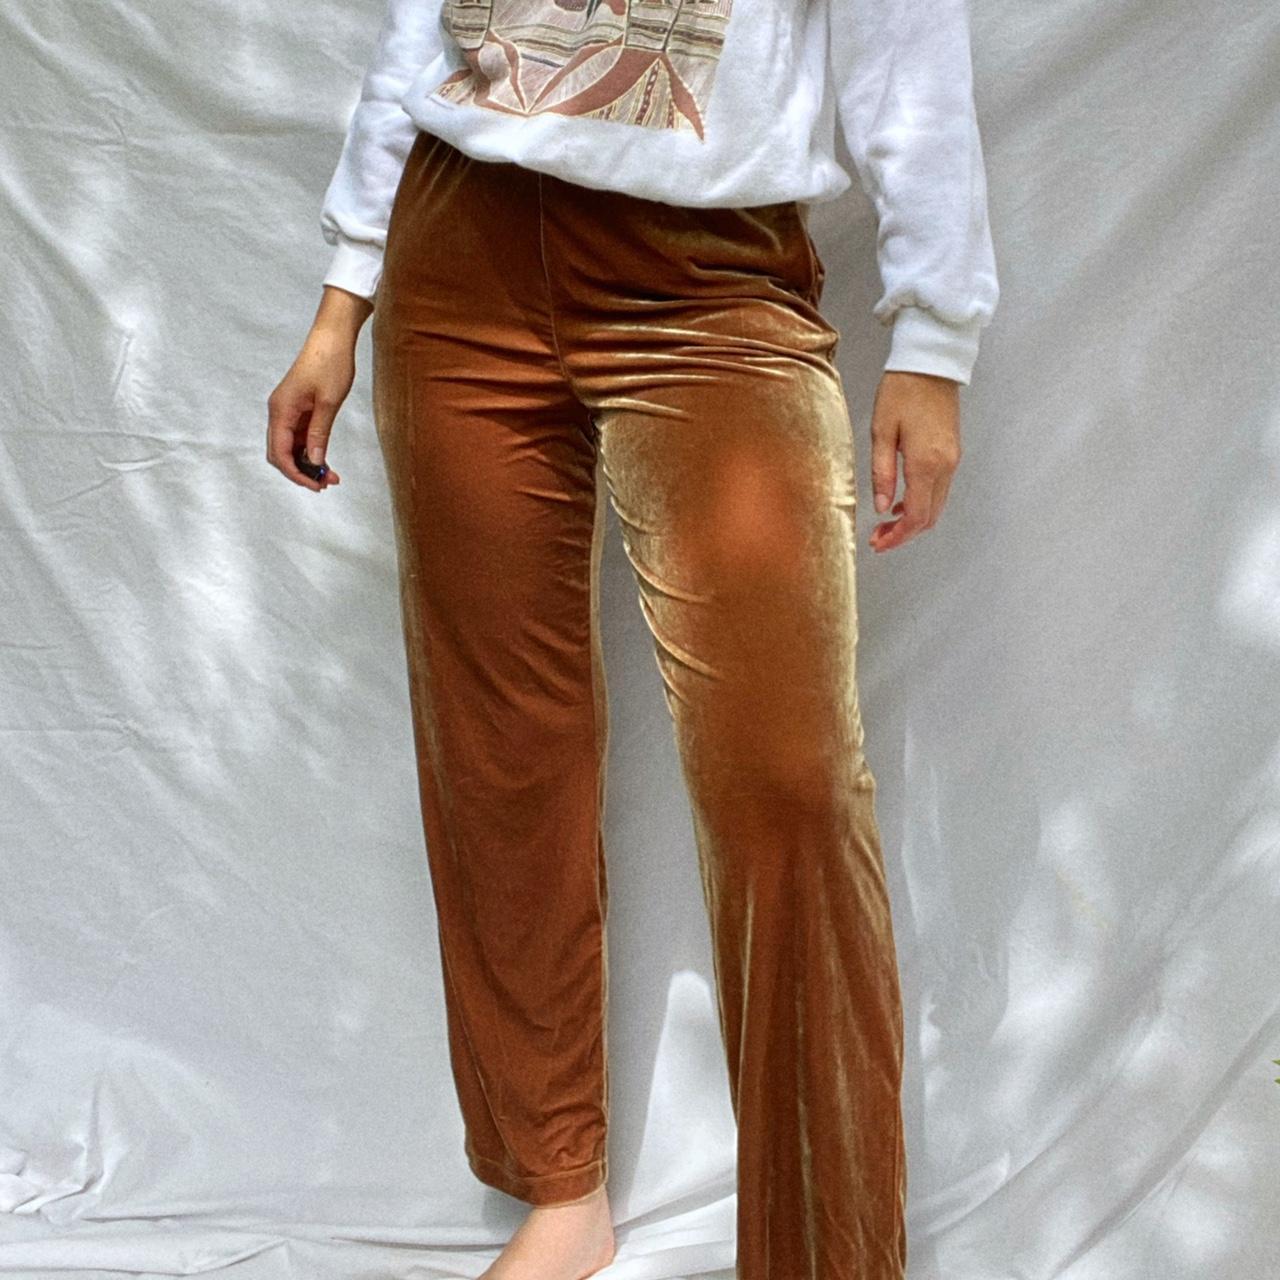 Women's high-waisted pants in gray melange wool blend | Golden Goose